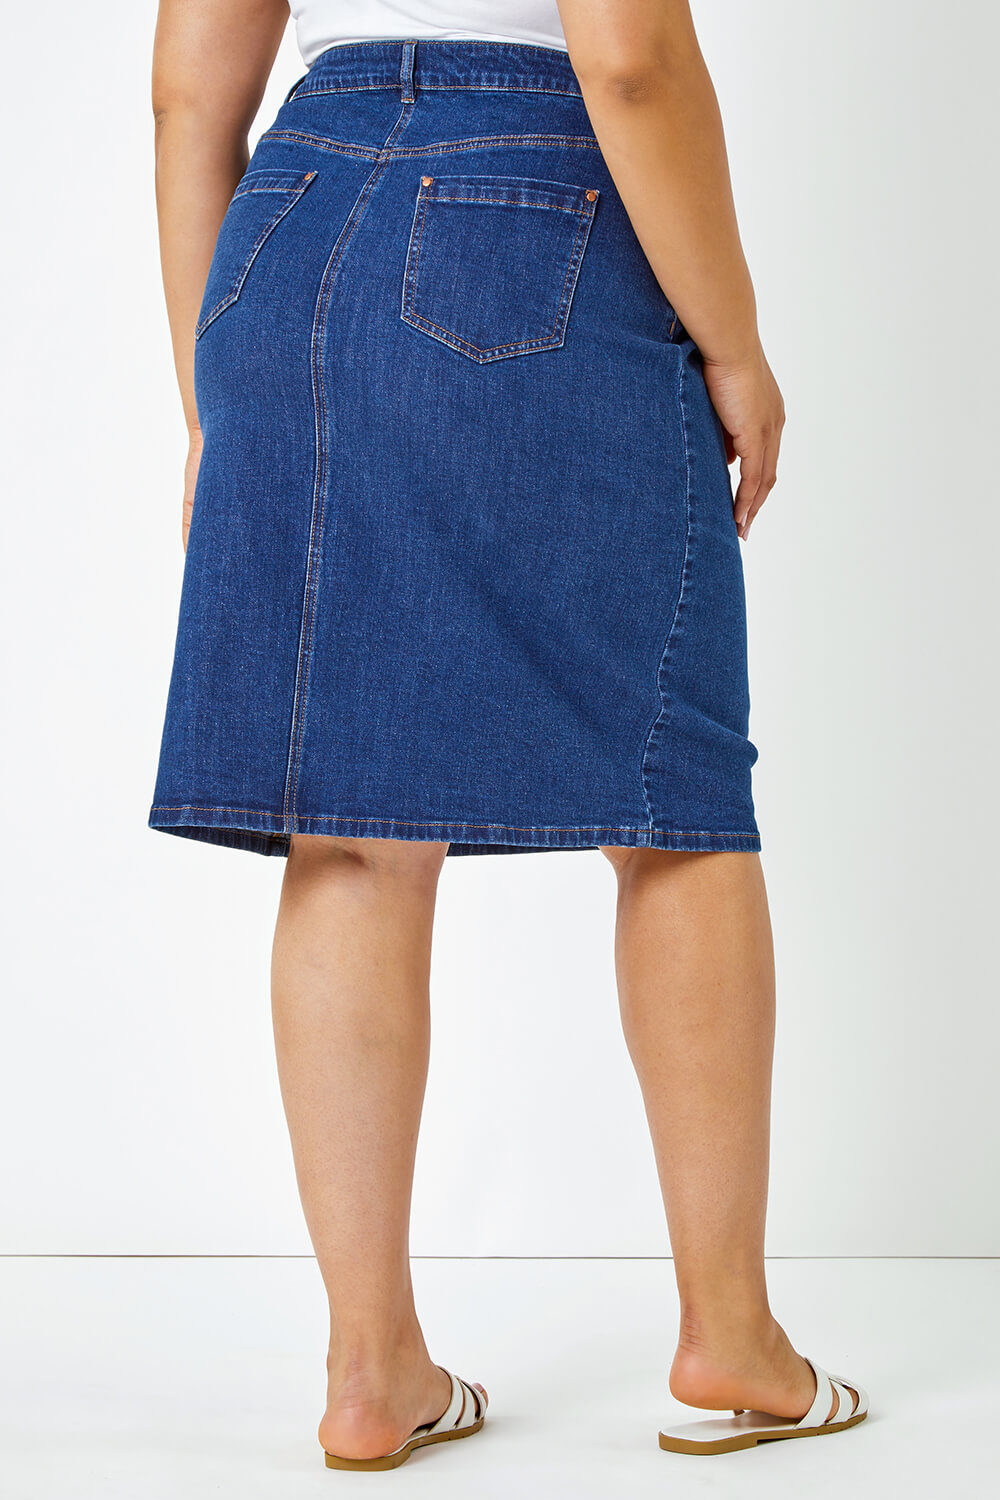 Indigo Curve Cotton Denim Stretch Skirt | Roman UK